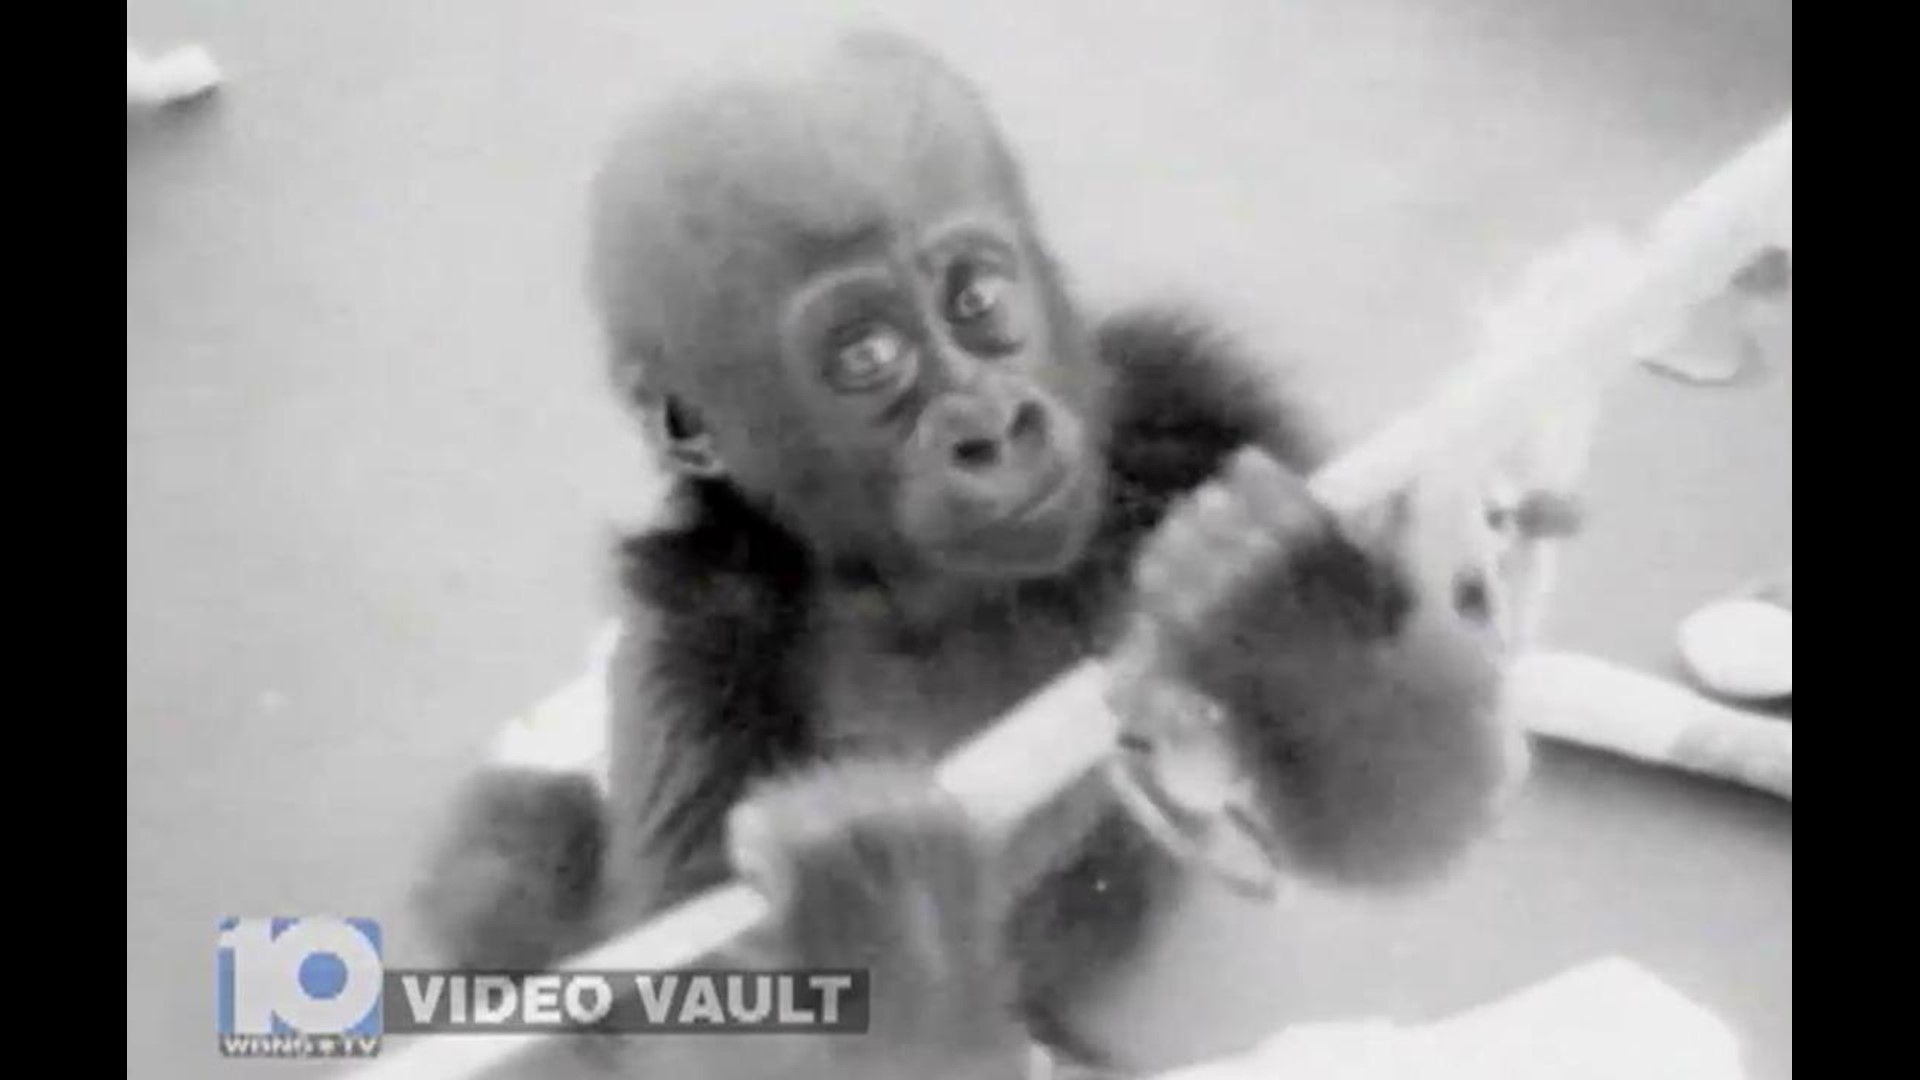 VIDEO VAULT: Columbus Zoo 1950s